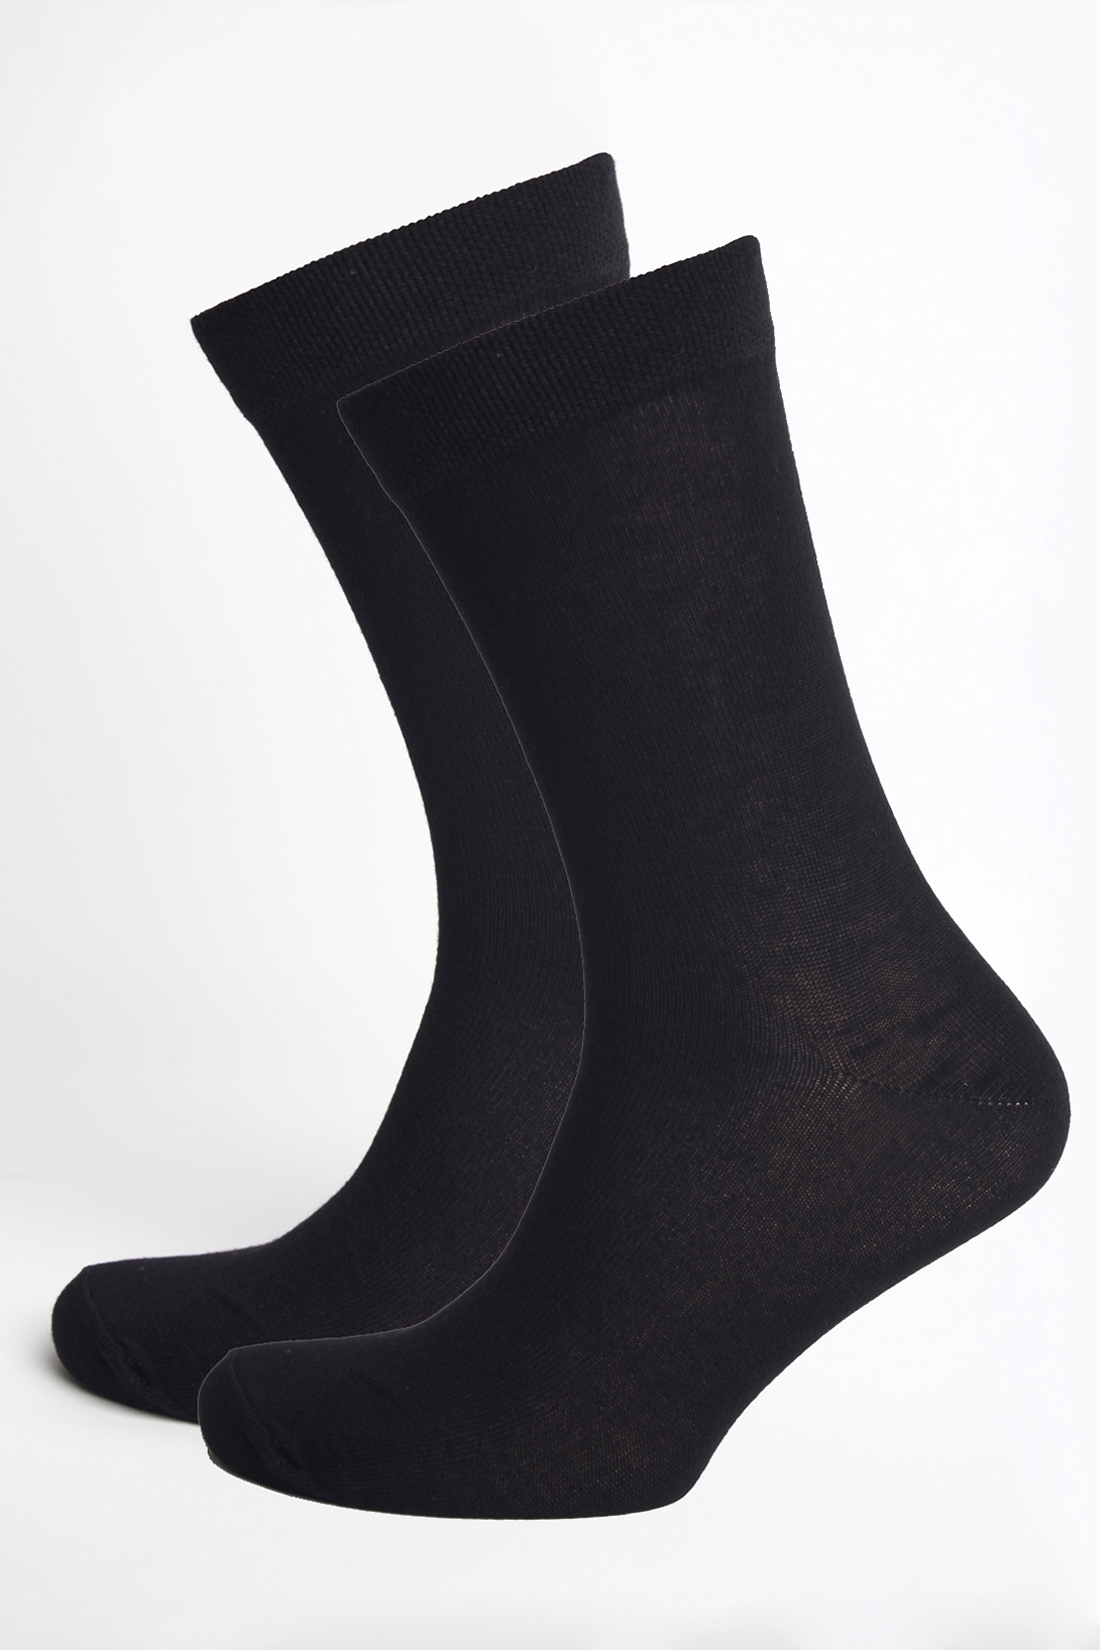 Мужские носки, 2 пары (арт. baon B891108), размер 43/45, цвет черный Мужские носки, 2 пары (арт. baon B891108) - фото 1